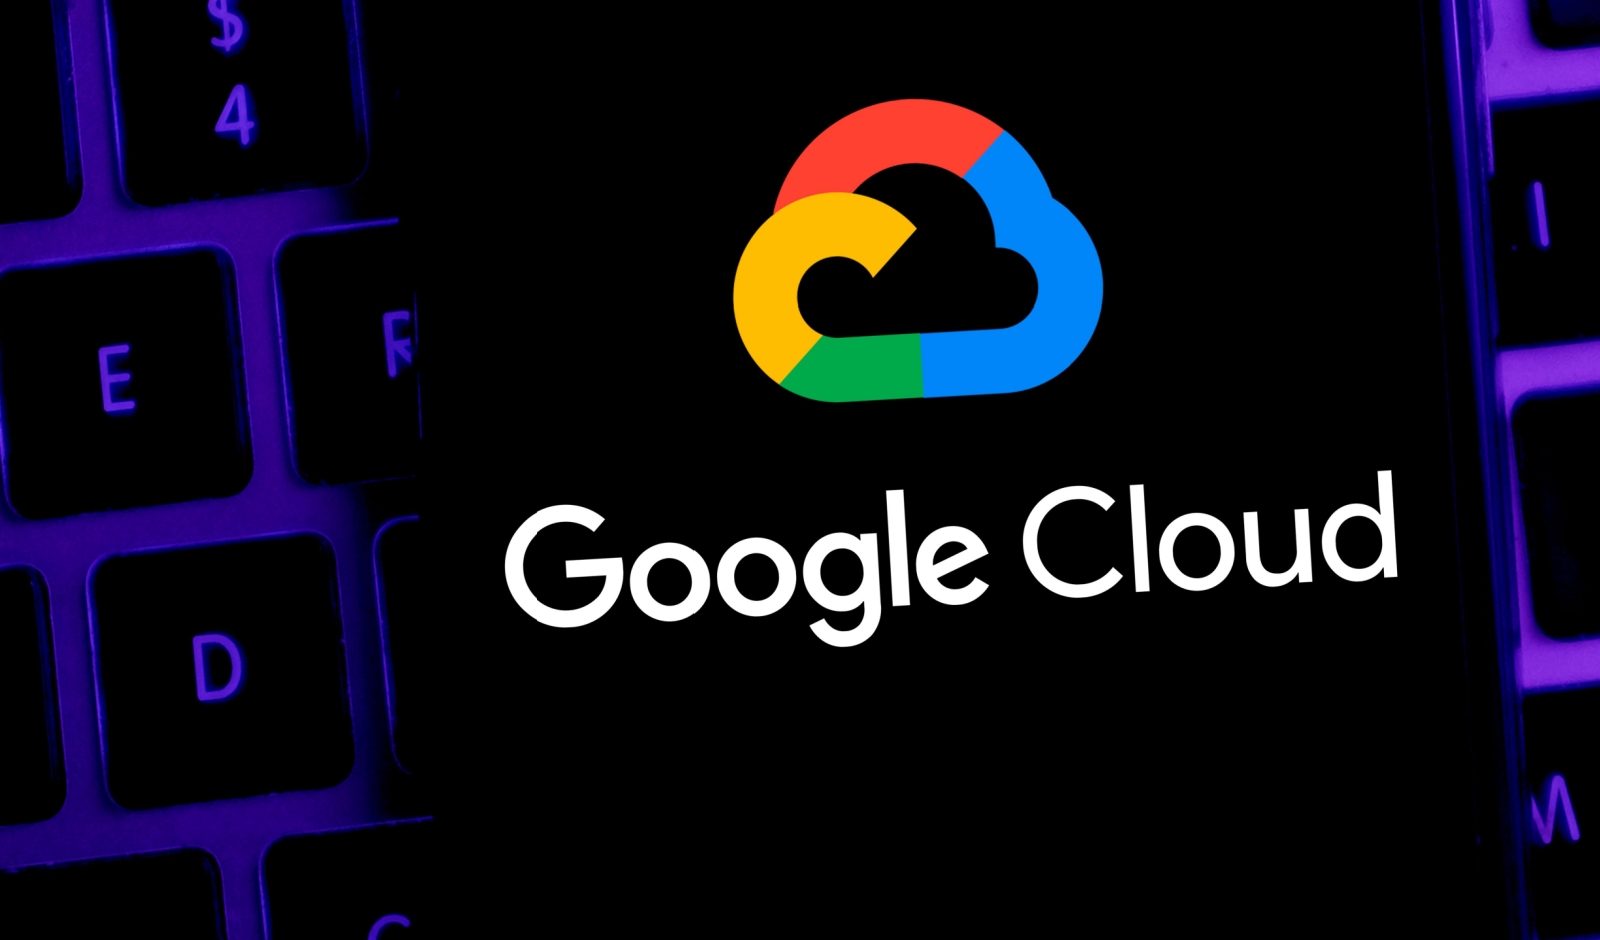 Google Cloud Joins Polygon as Validator in PoS Network